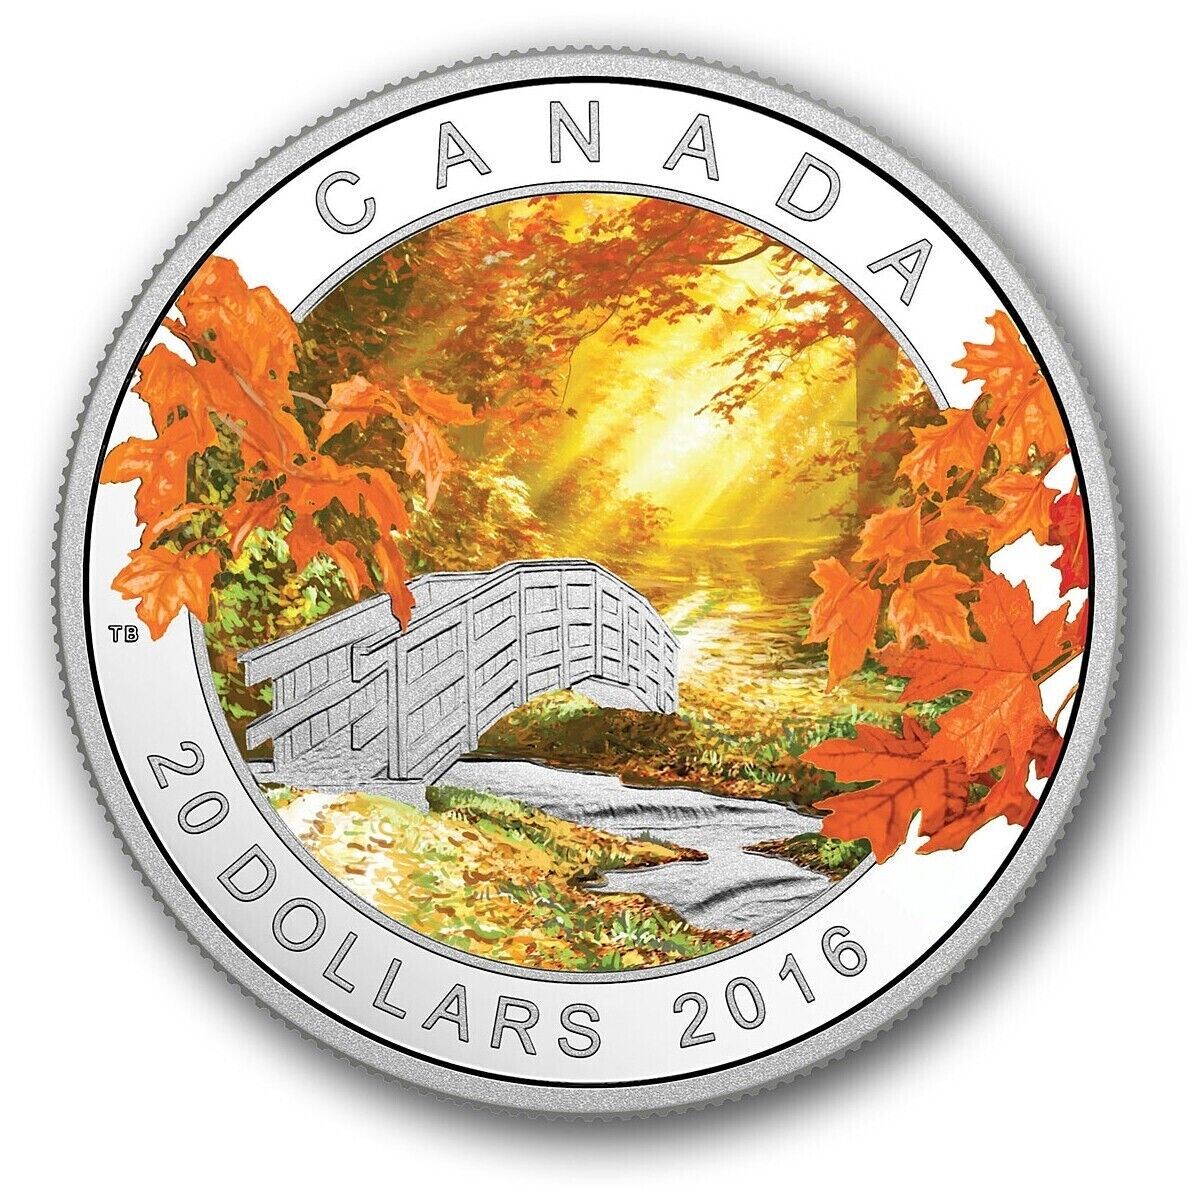 1 oz Silver Coin 2014 Canada $20 Color Proof RCM - Autumn Tranquillity-classypw.com-1